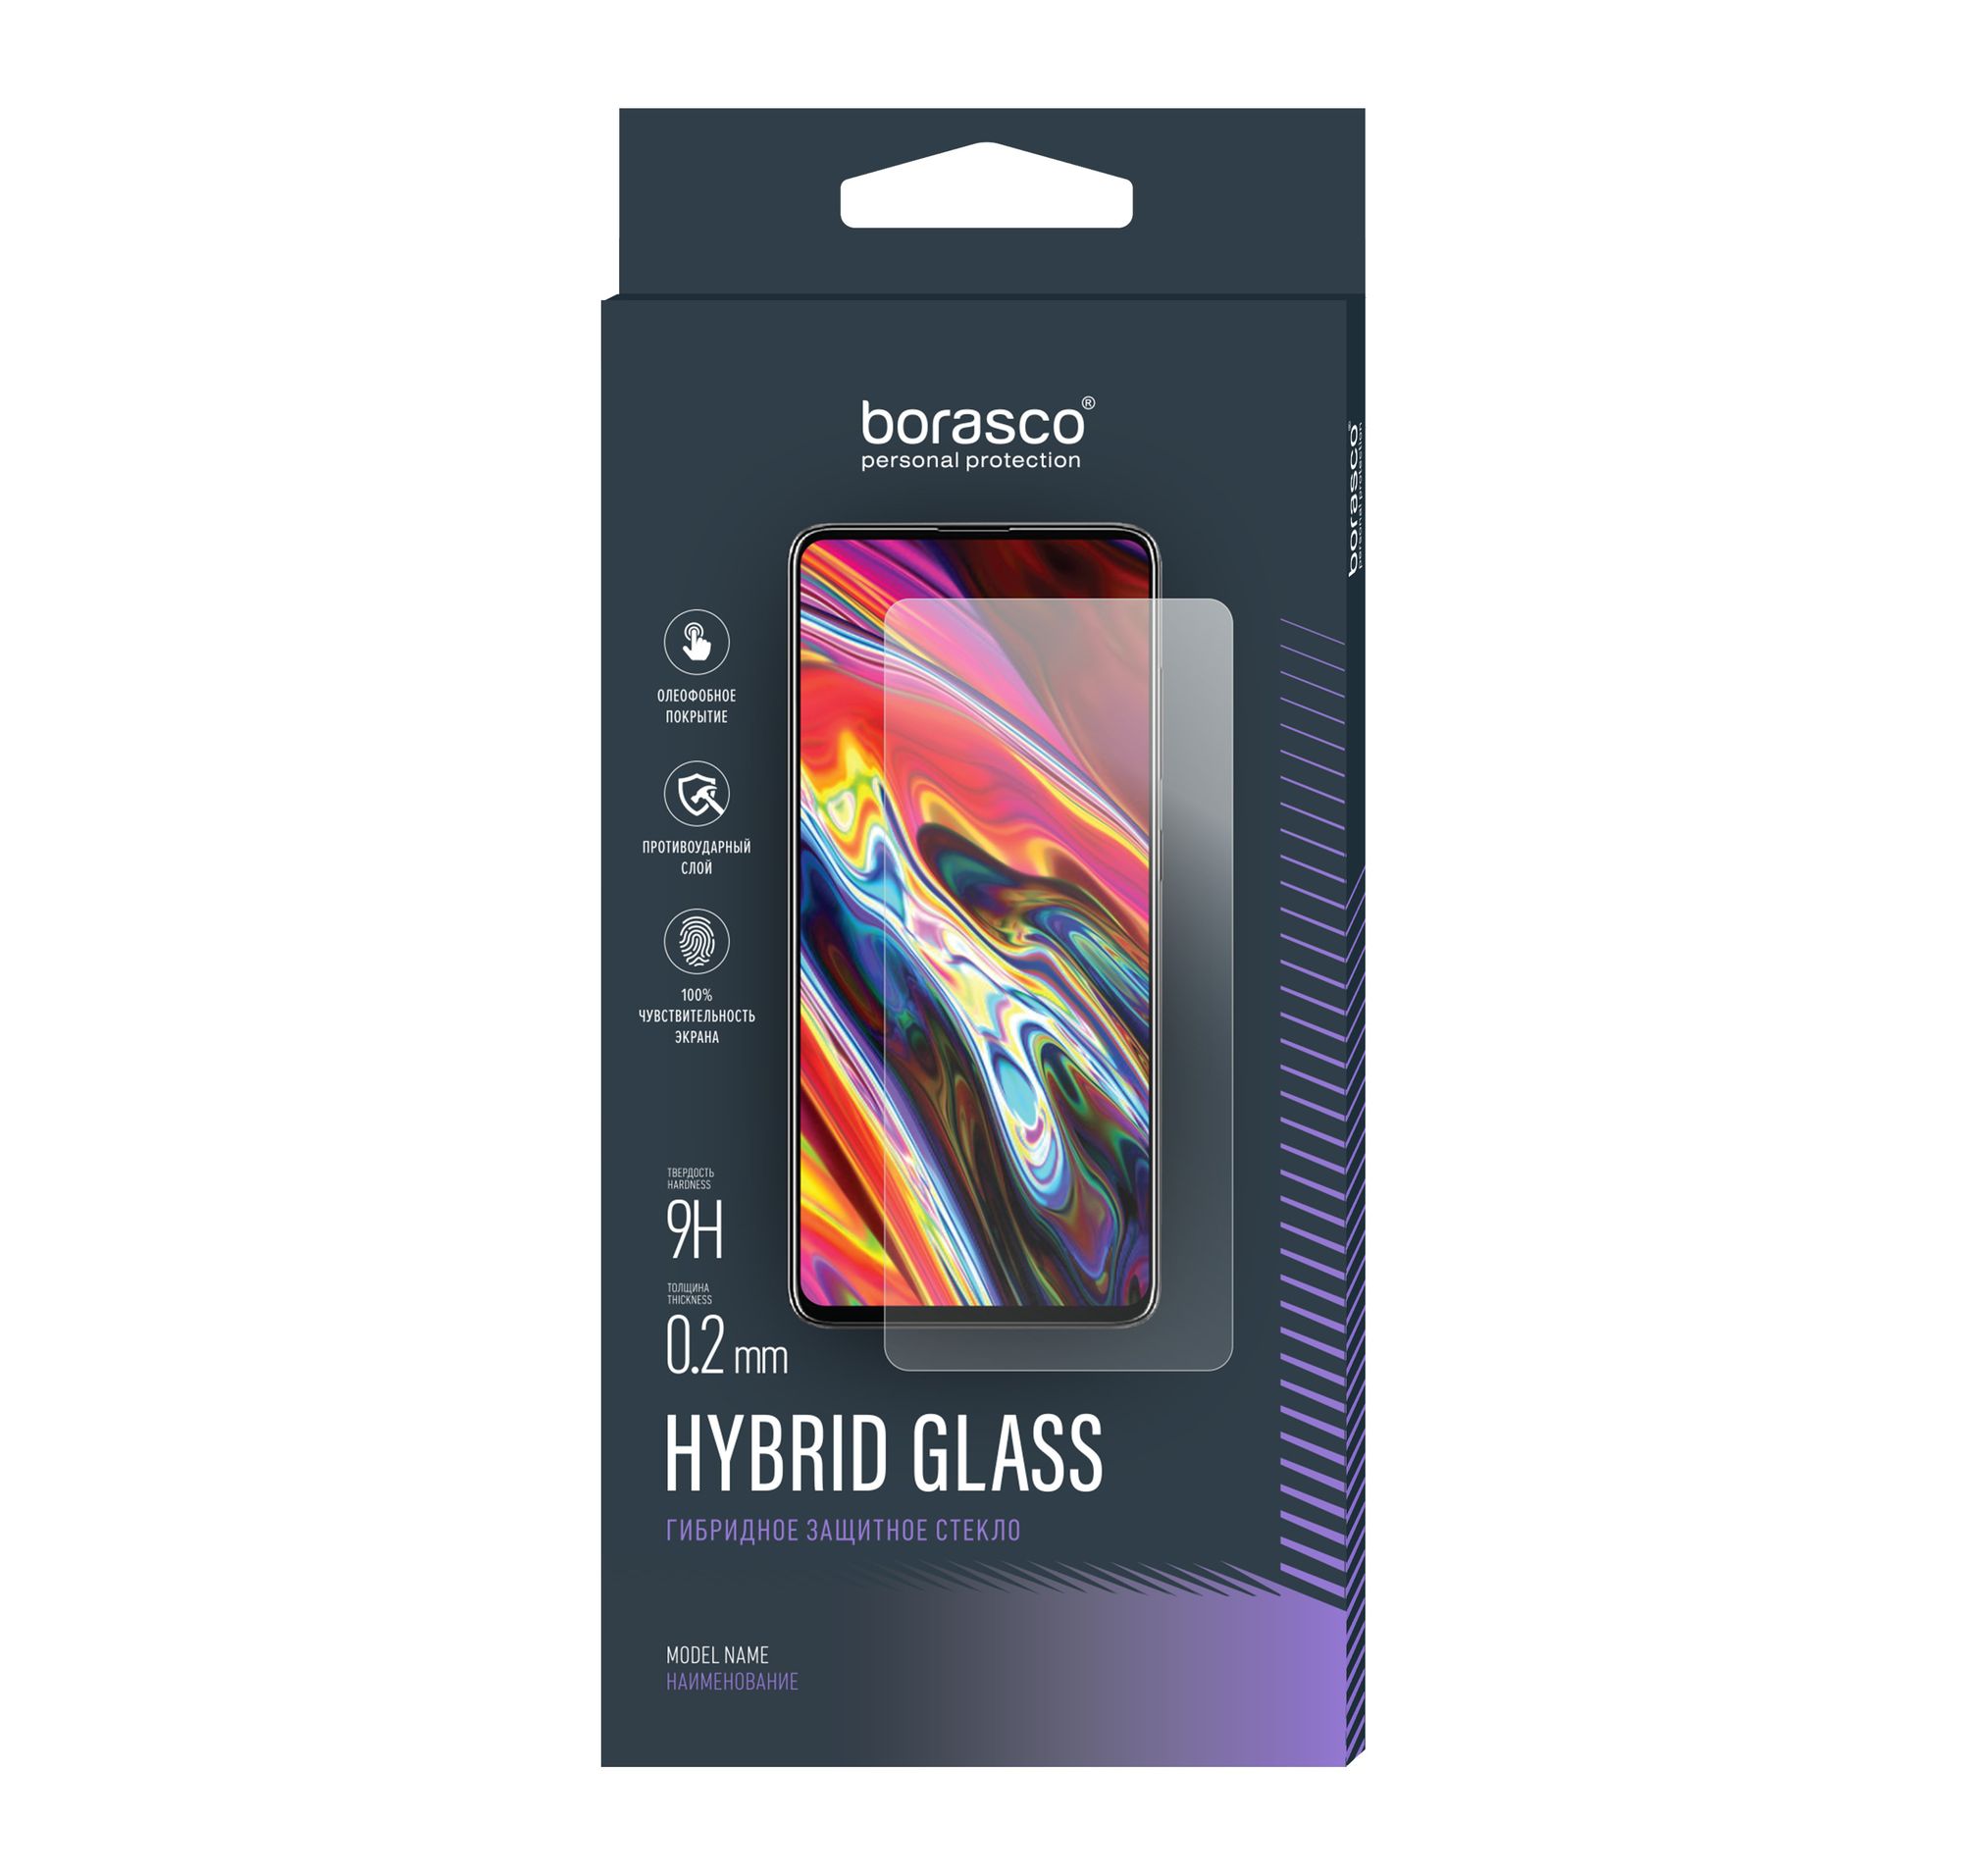 Стекло защитное Hybrid Glass VSP 0,26 мм для Samsung Galaxy A9 2018 защитное стекло для samsung galaxy a7 2018 a750 a750f a730f закаленное для samsung a9 a8 a6 plus 2018